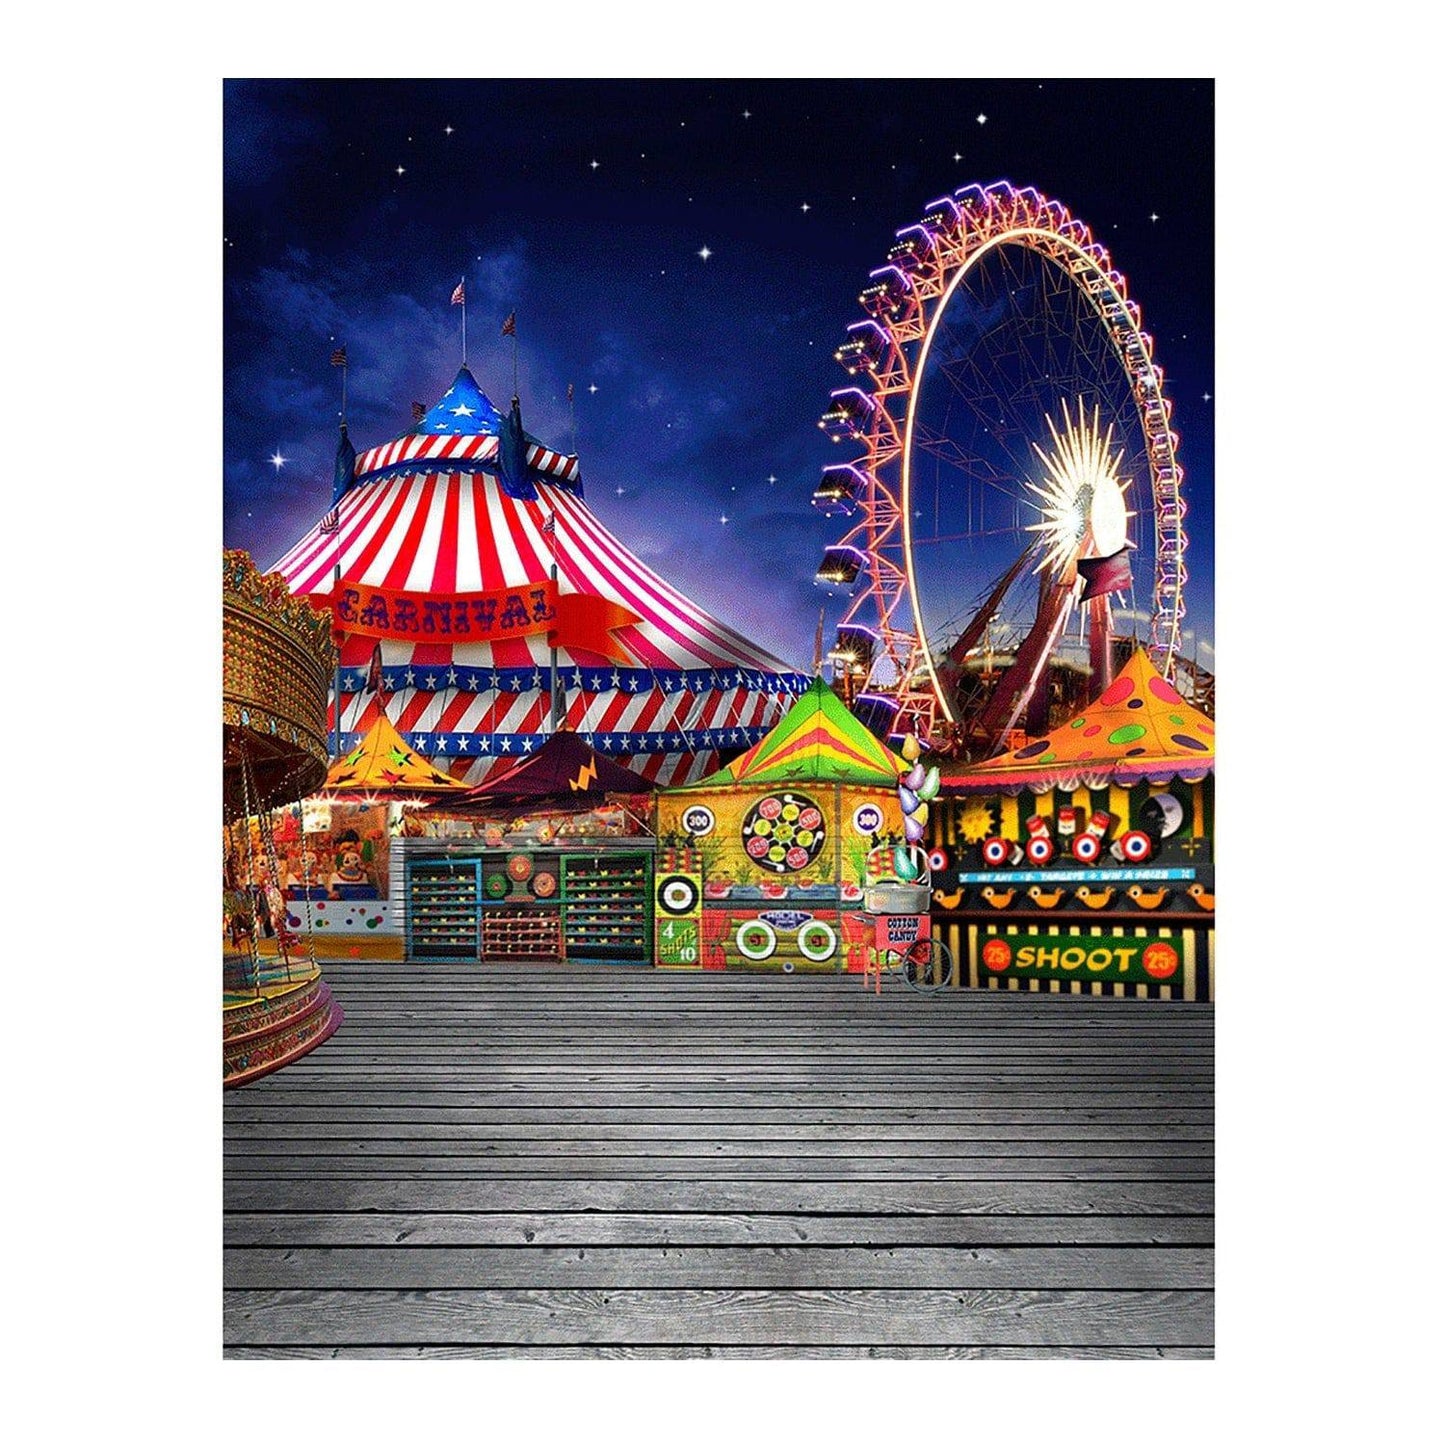 Amusement Park On The Boardwalk Photo Backdrop - Pro 6  x 8  